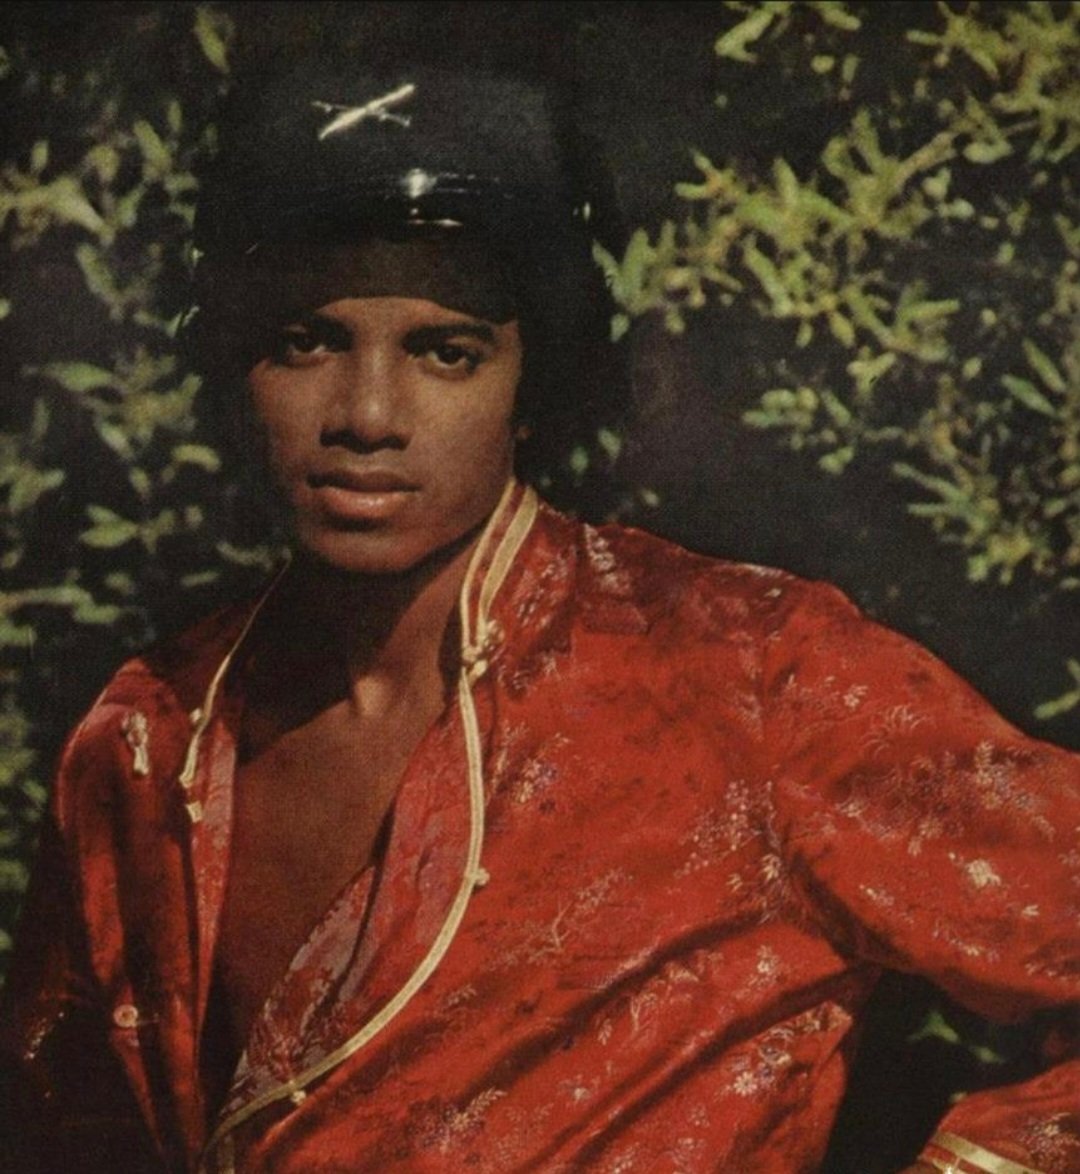 June 1984 Ebony Magazine.
#MichaelJackson #MJFam